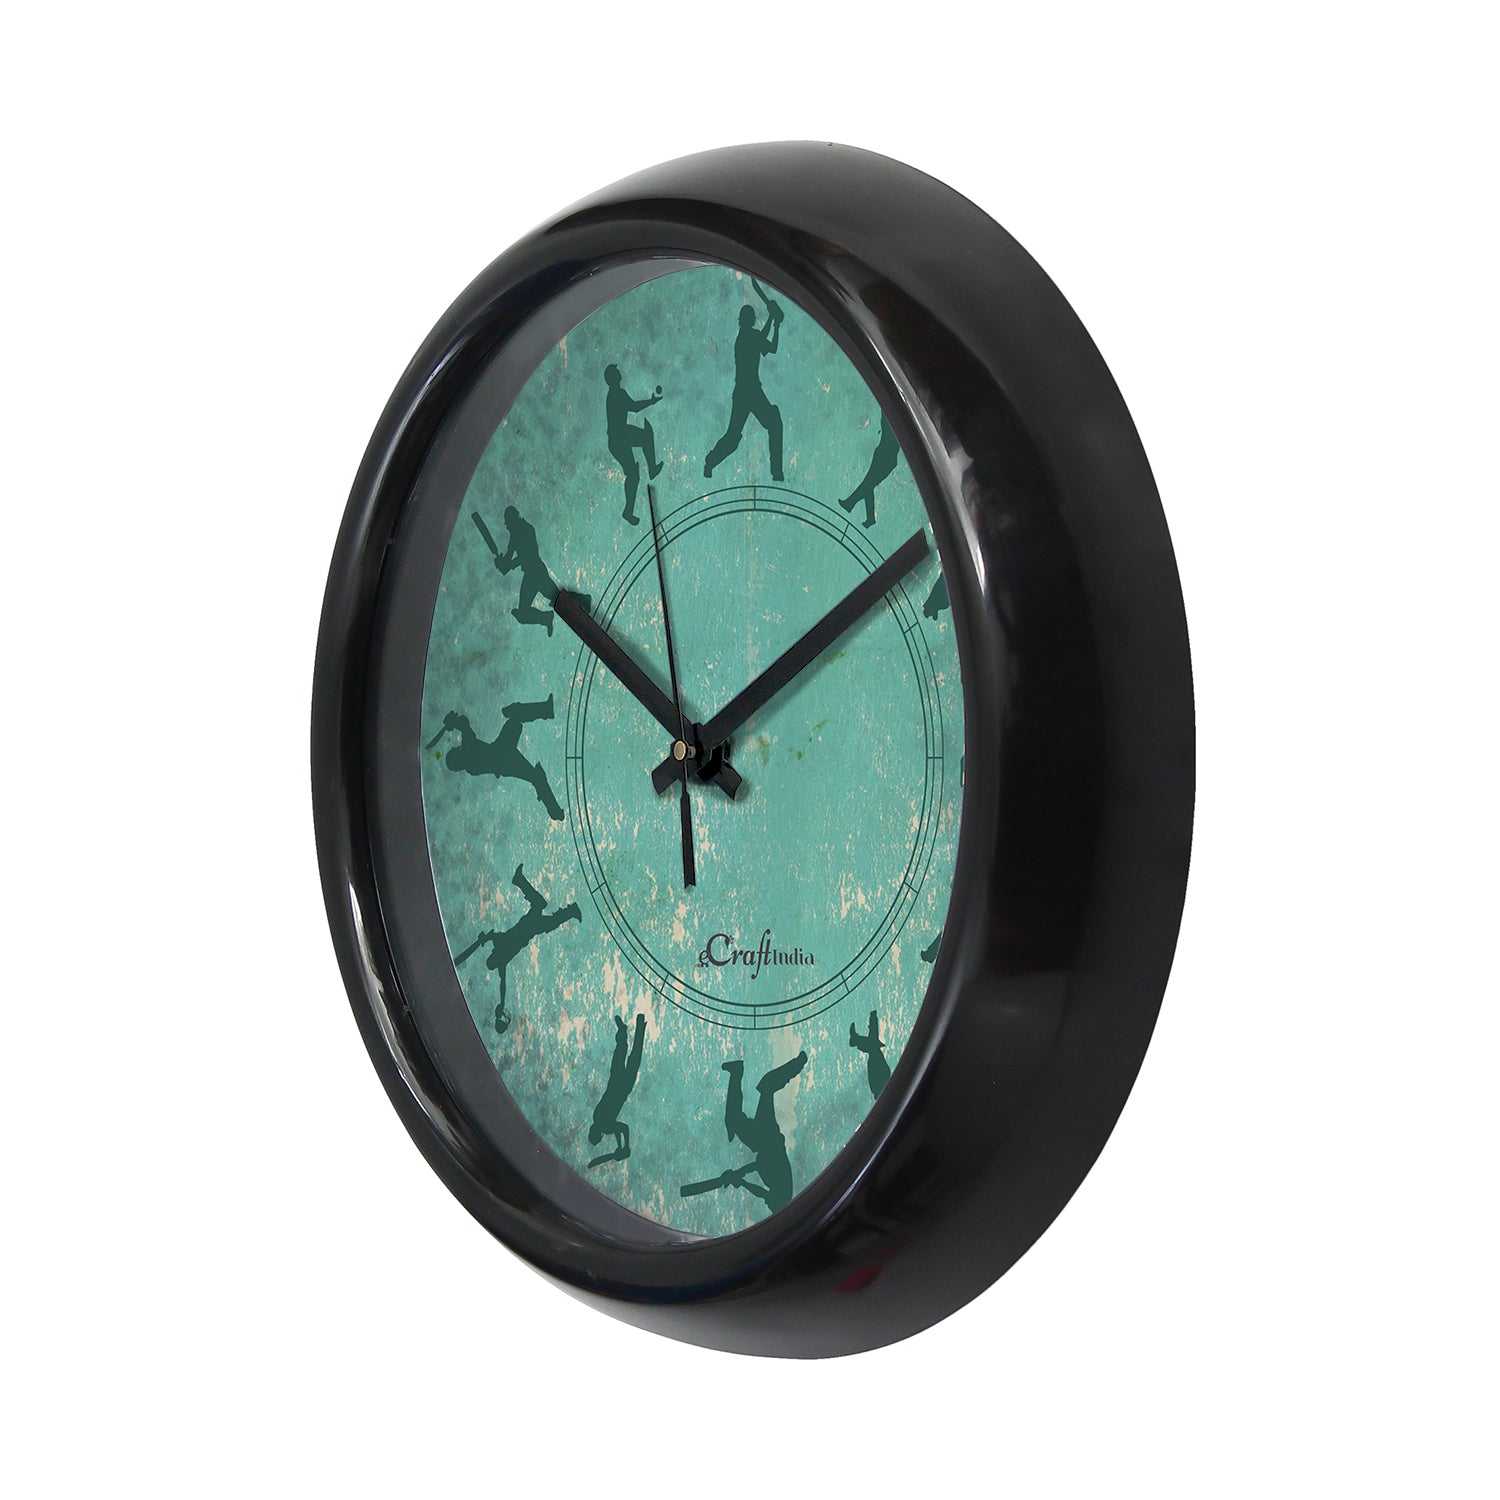 "Cricket Theme" Designer Round Analog Black Wall Clock 4